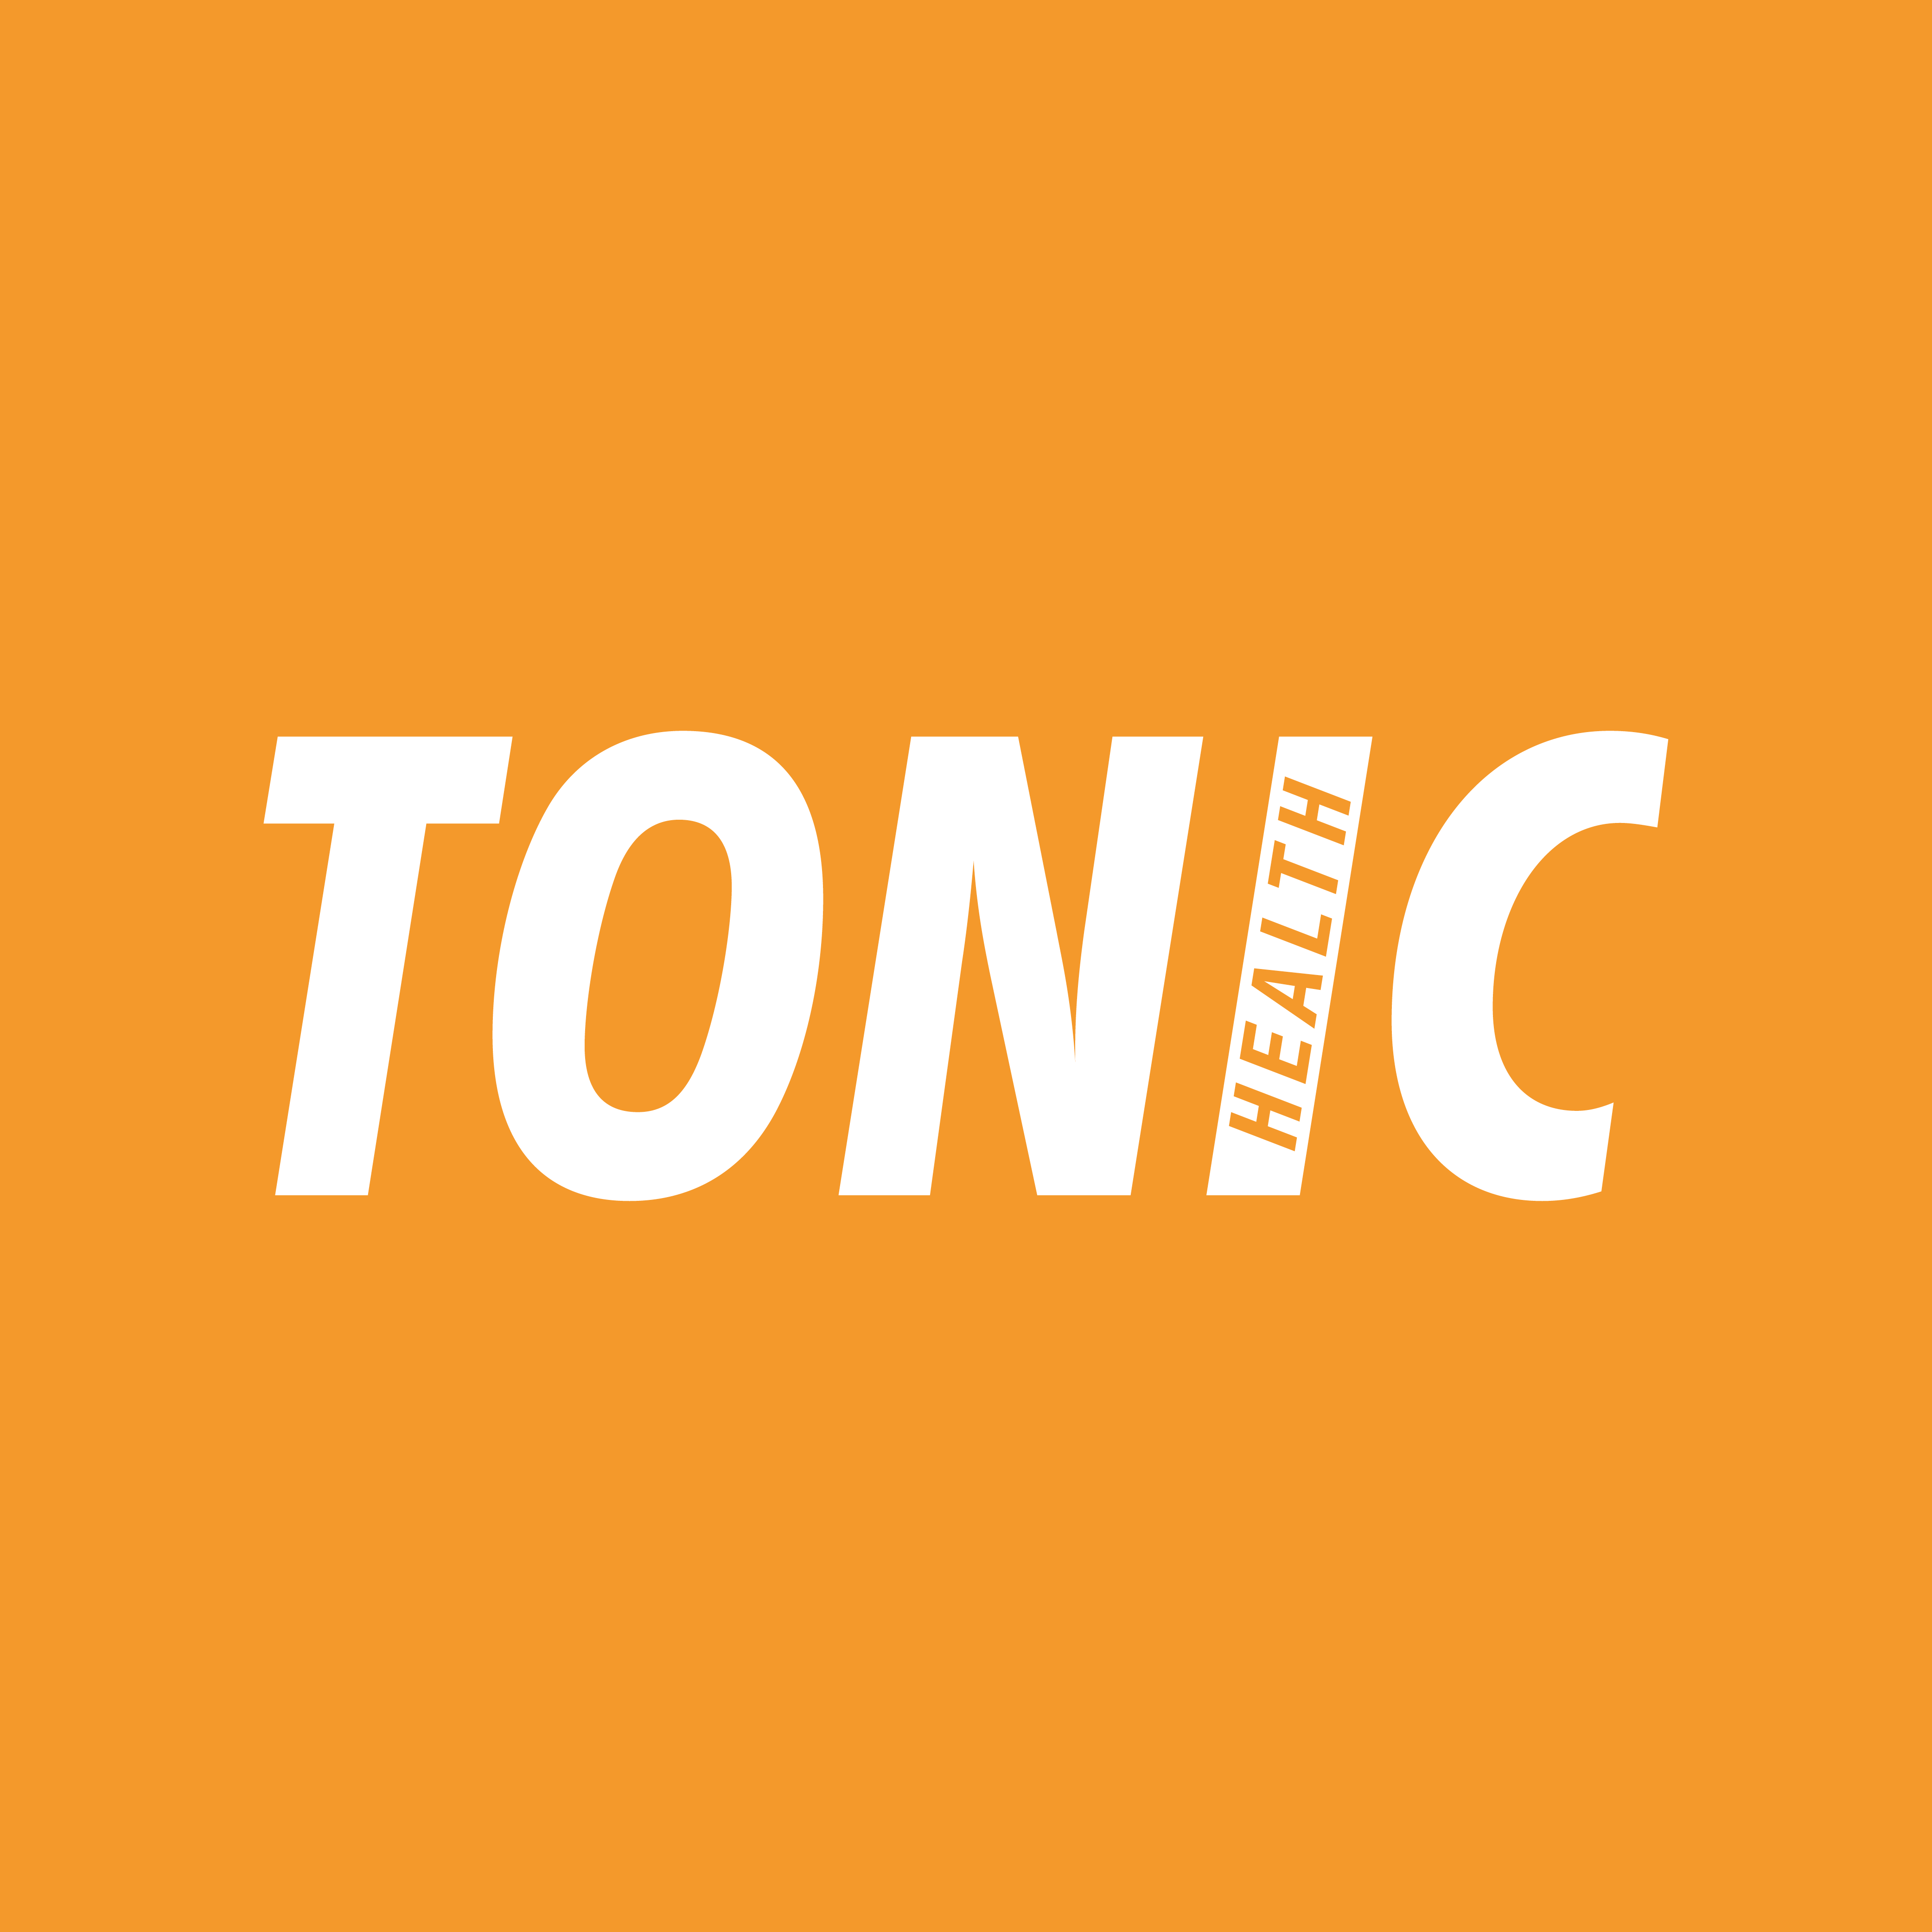 Tonic Health